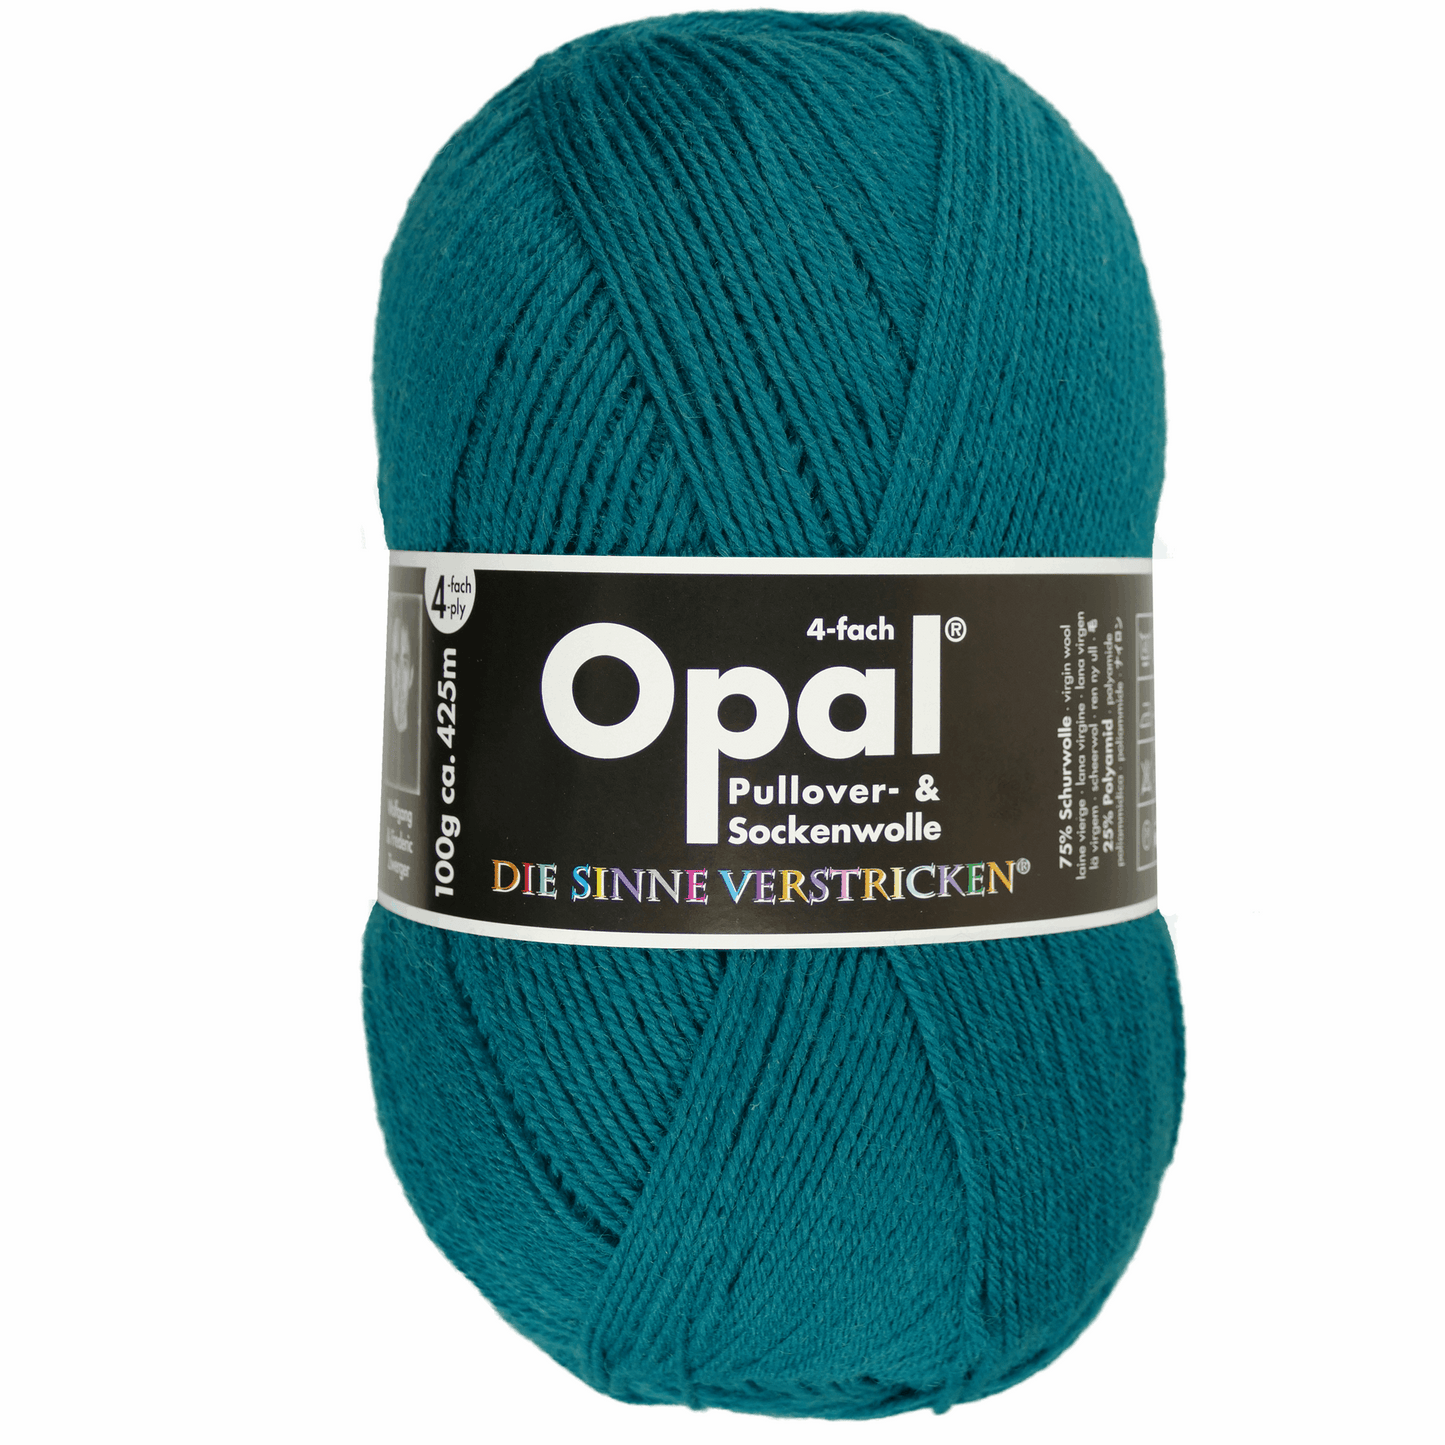 Opal plain 4 threads. 100g 2011/12, 97760, color blue-green 9934